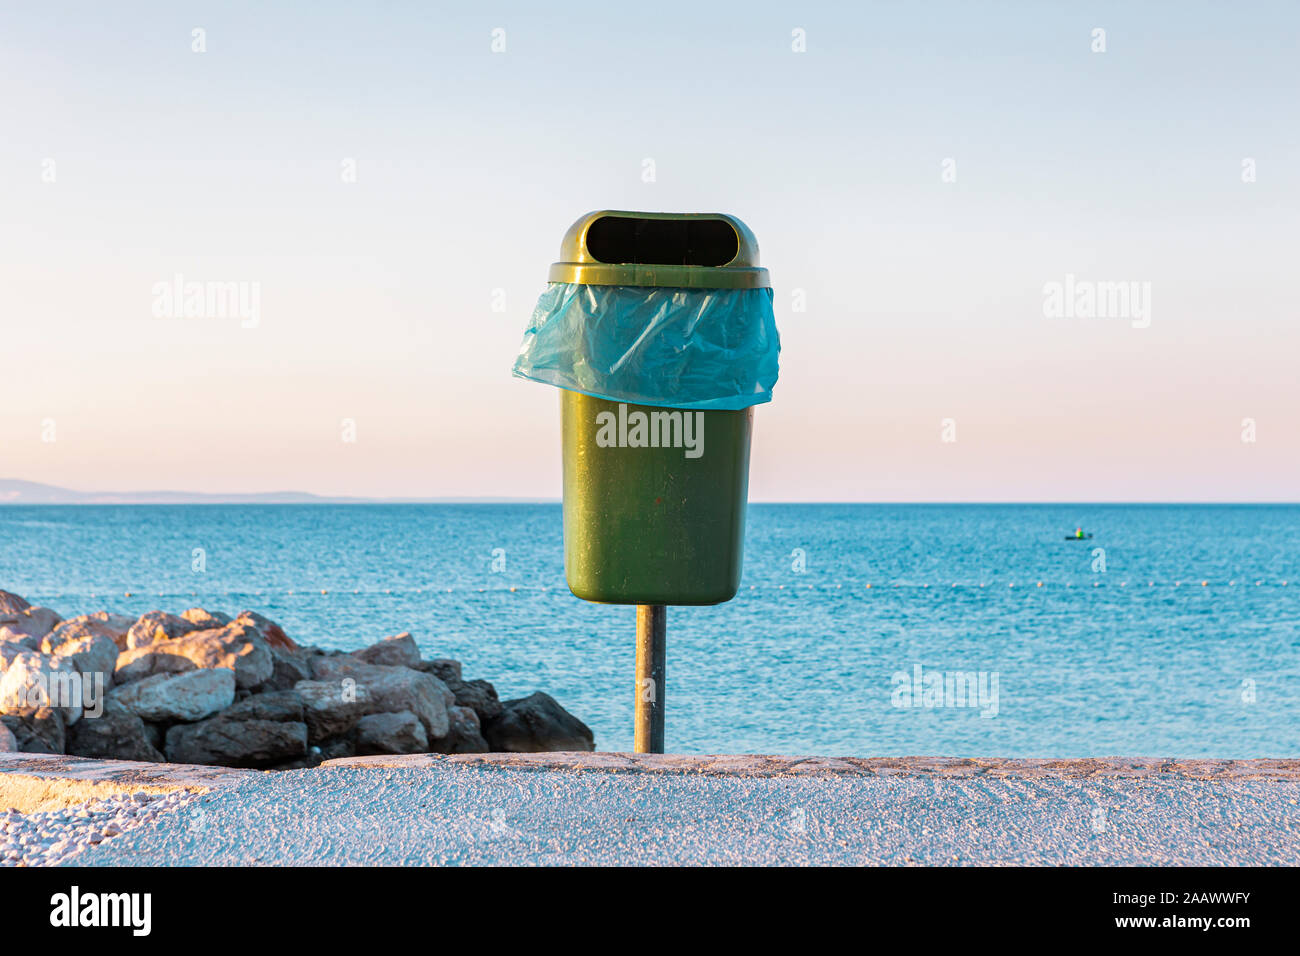 Croatia, Krk, trash bin against tranquil sea Stock Photo